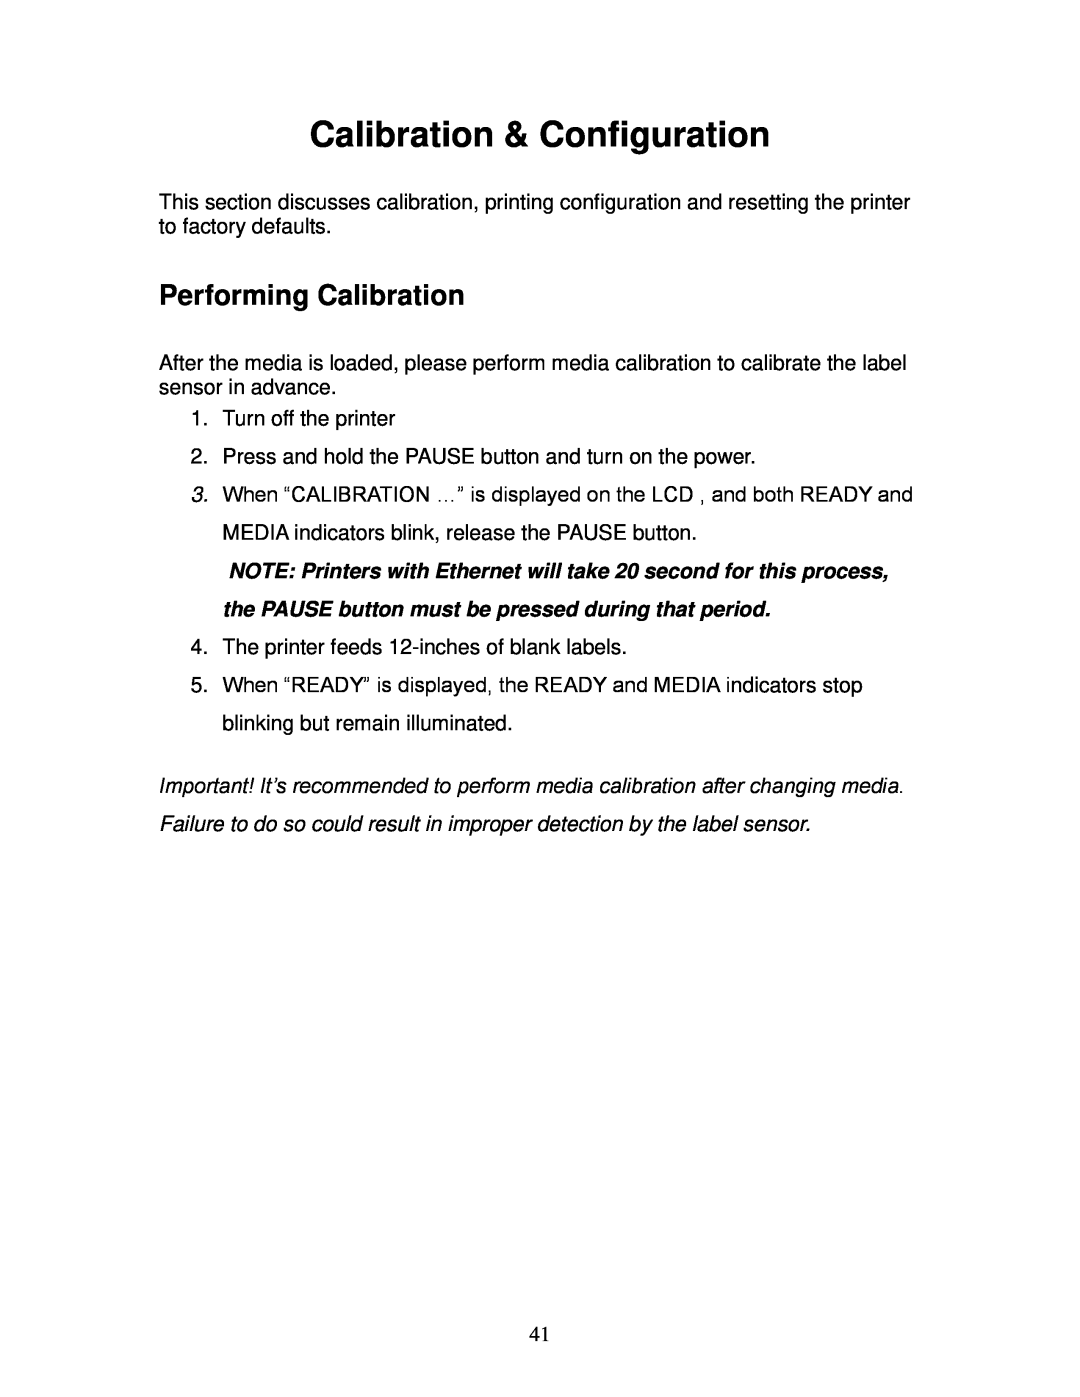 AMT Datasouth 4600 manual Calibration & Configuration, Performing Calibration 